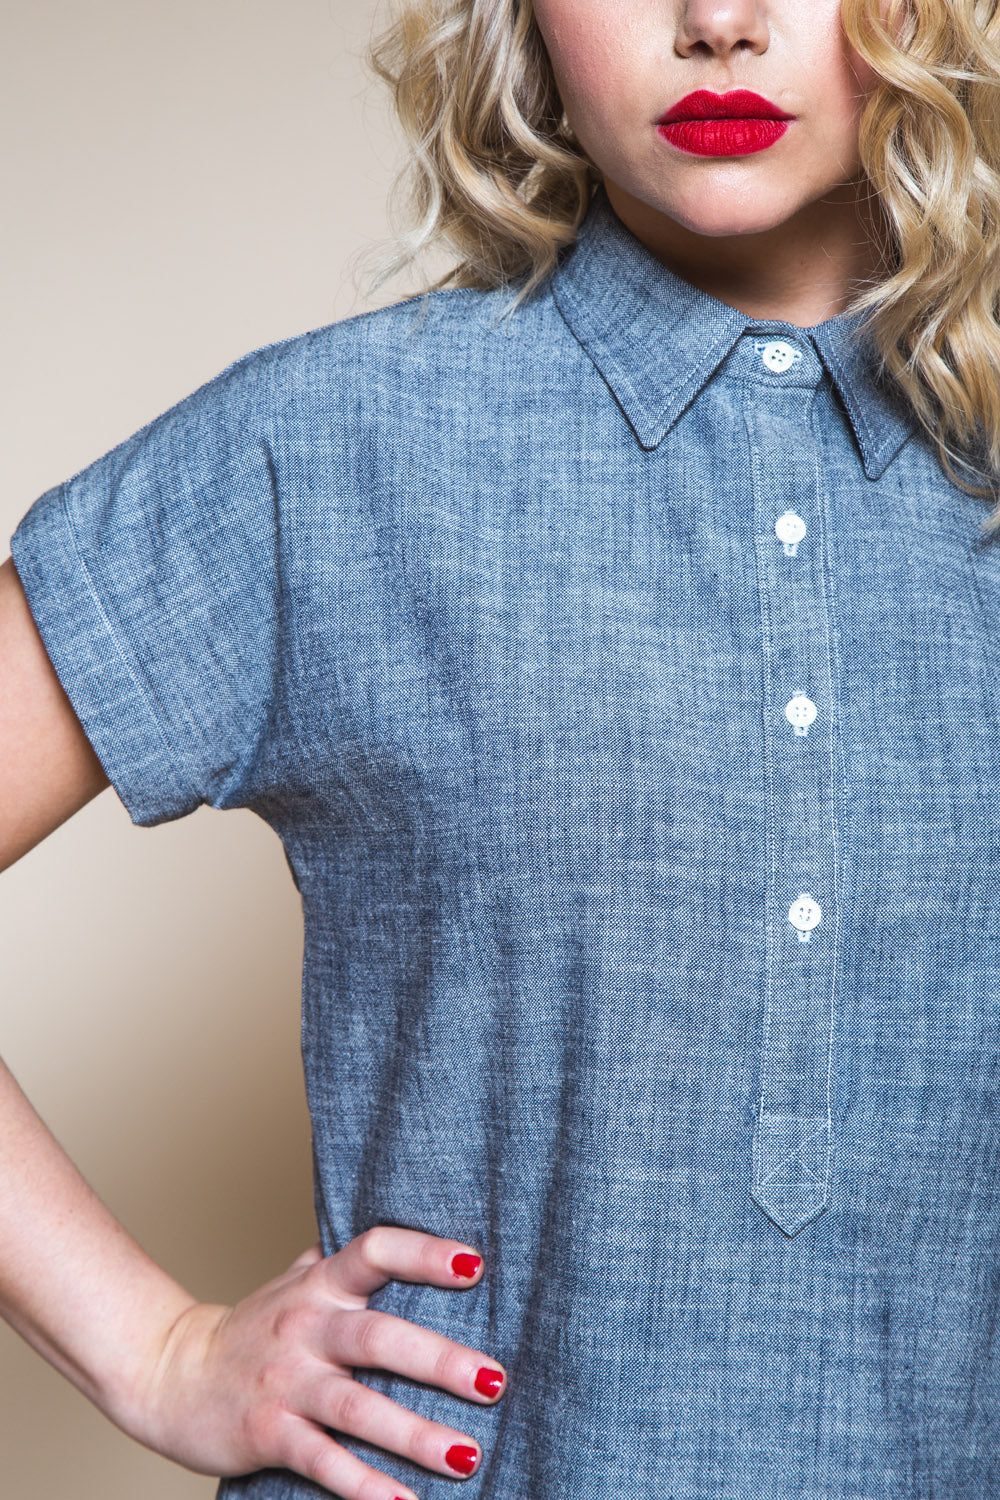 Kalle Shirt + Shirtdress - Sizes 0-20 - Closet Core Patterns